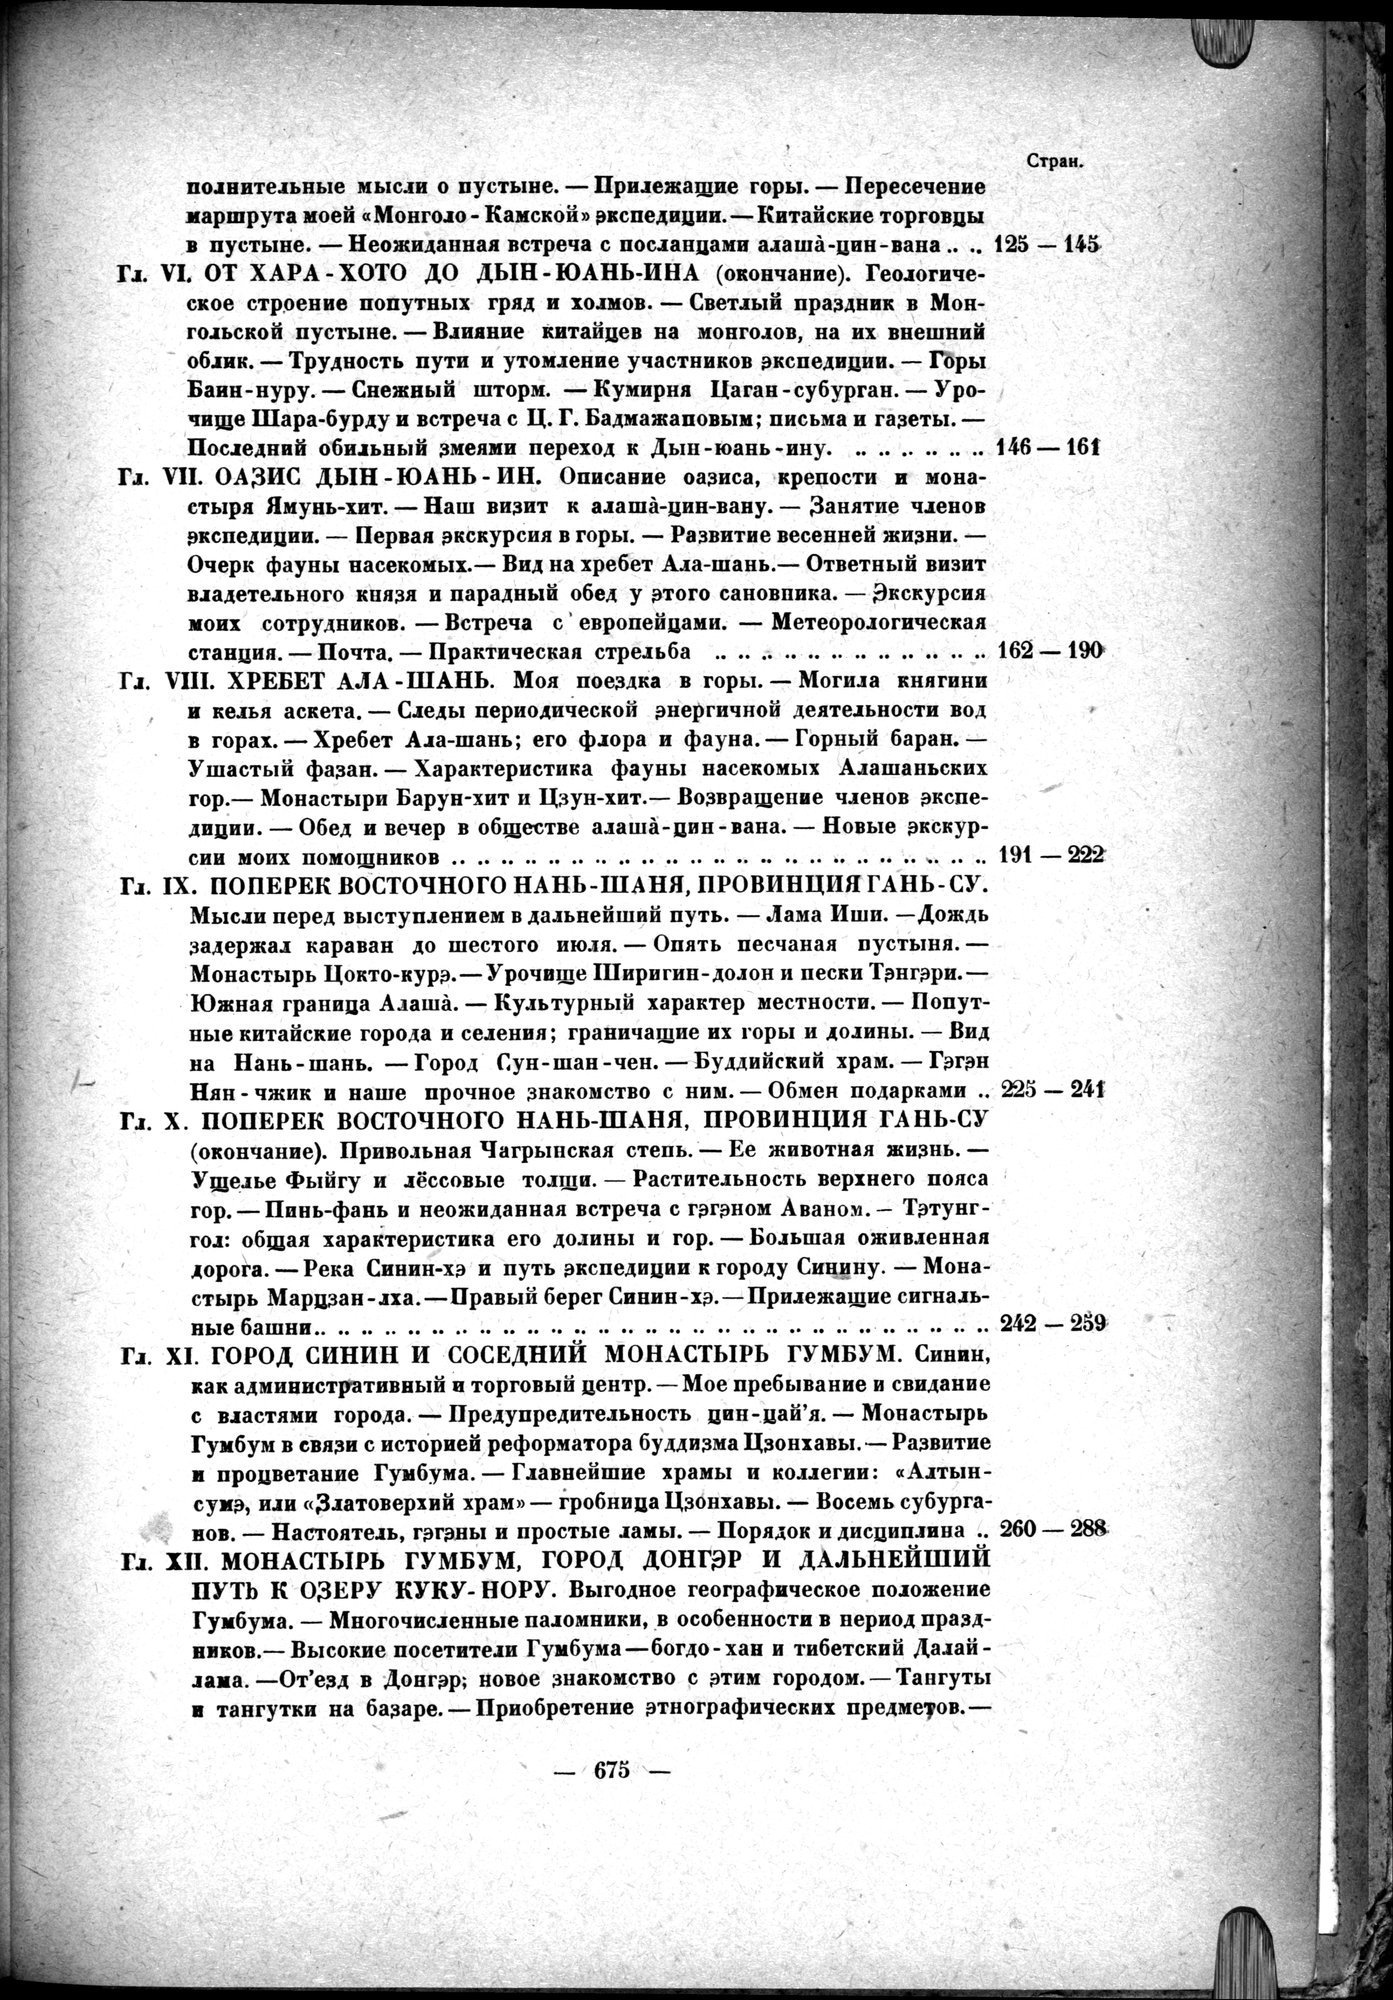 Mongoliya i Amdo i mertby gorod Khara-Khoto : vol.1 / Page 765 (Grayscale High Resolution Image)